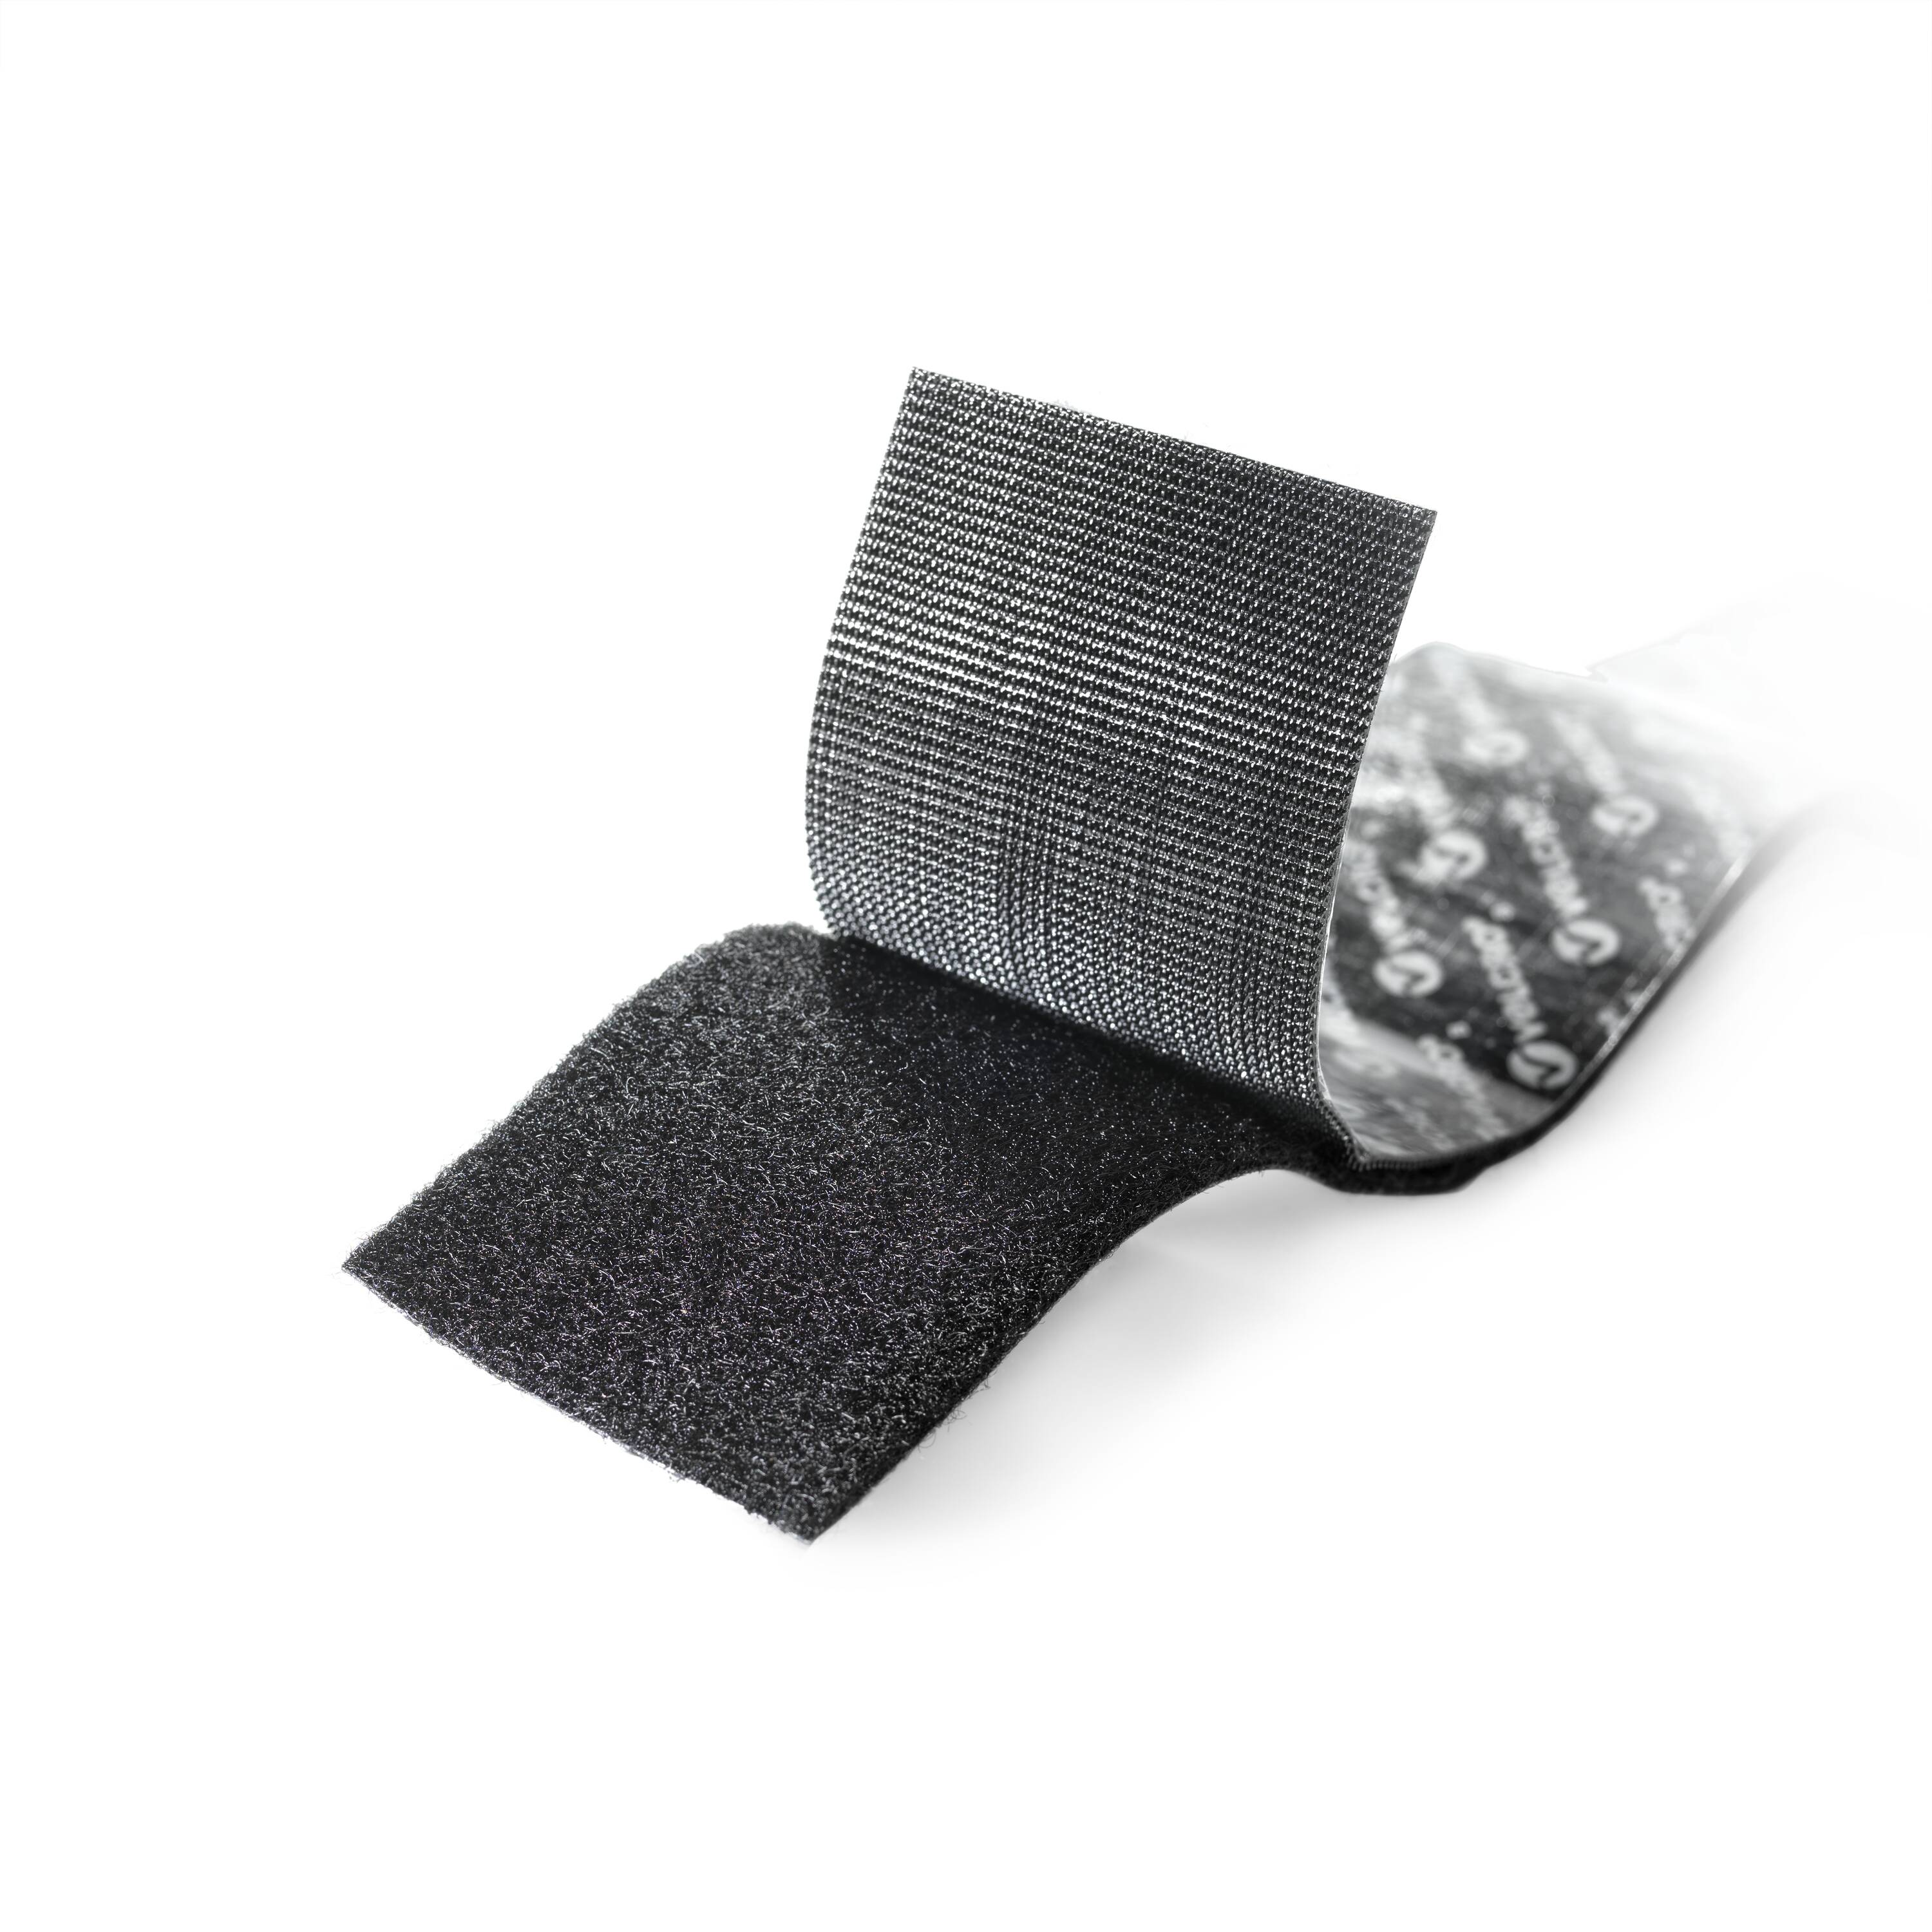 Velcro Brand Industrial Strength Fasteners